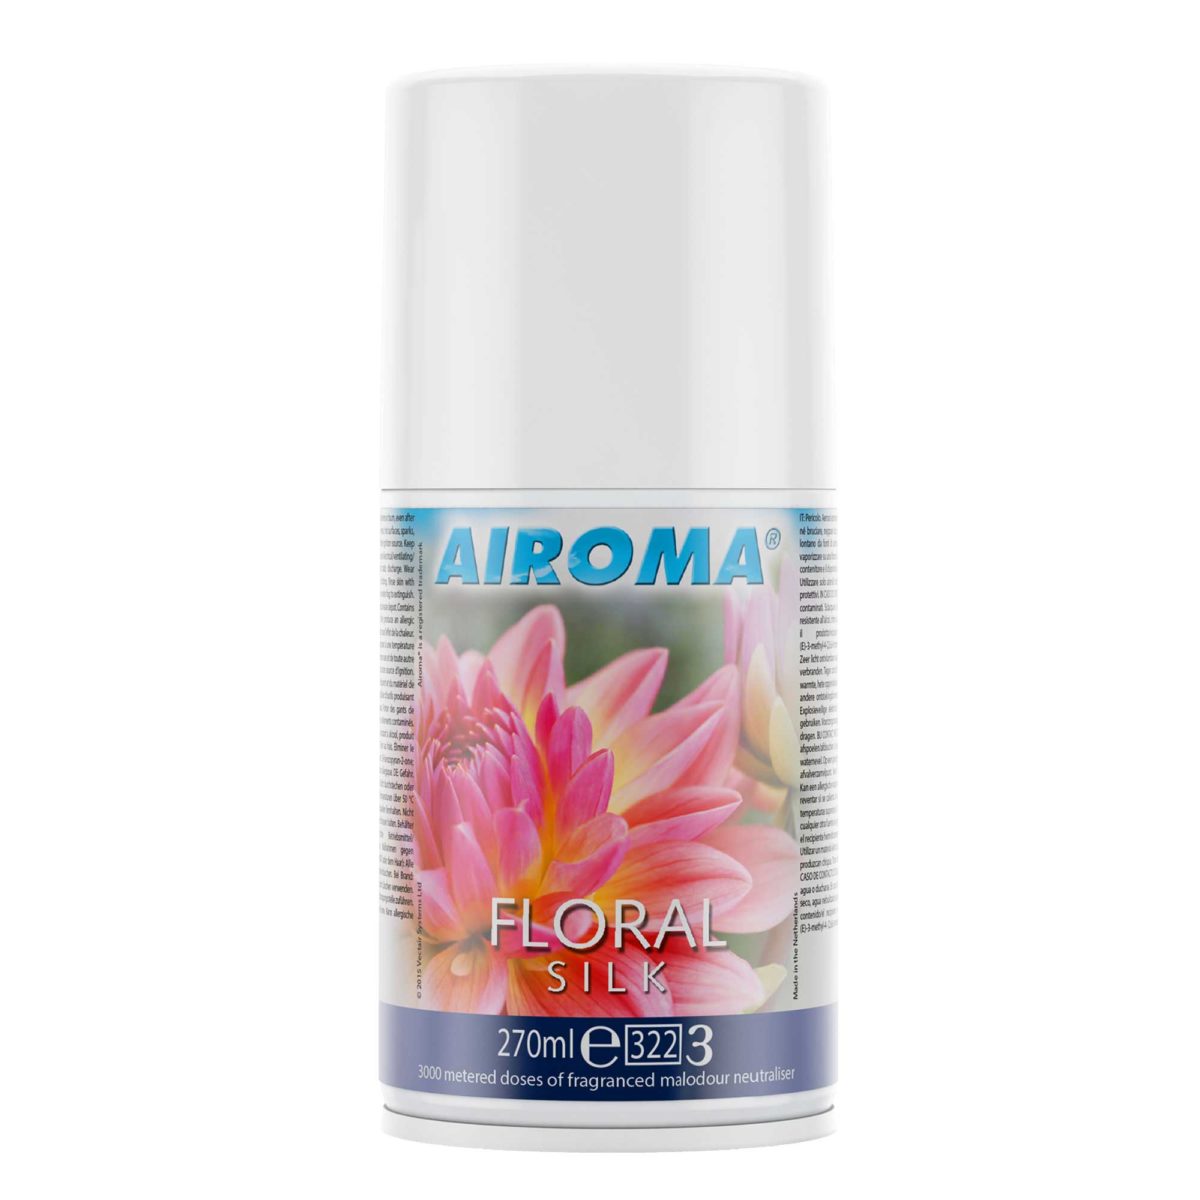 Vectair Airoma Floral Silk õhuvärskendaja, 270ml,  karbis 12 tk